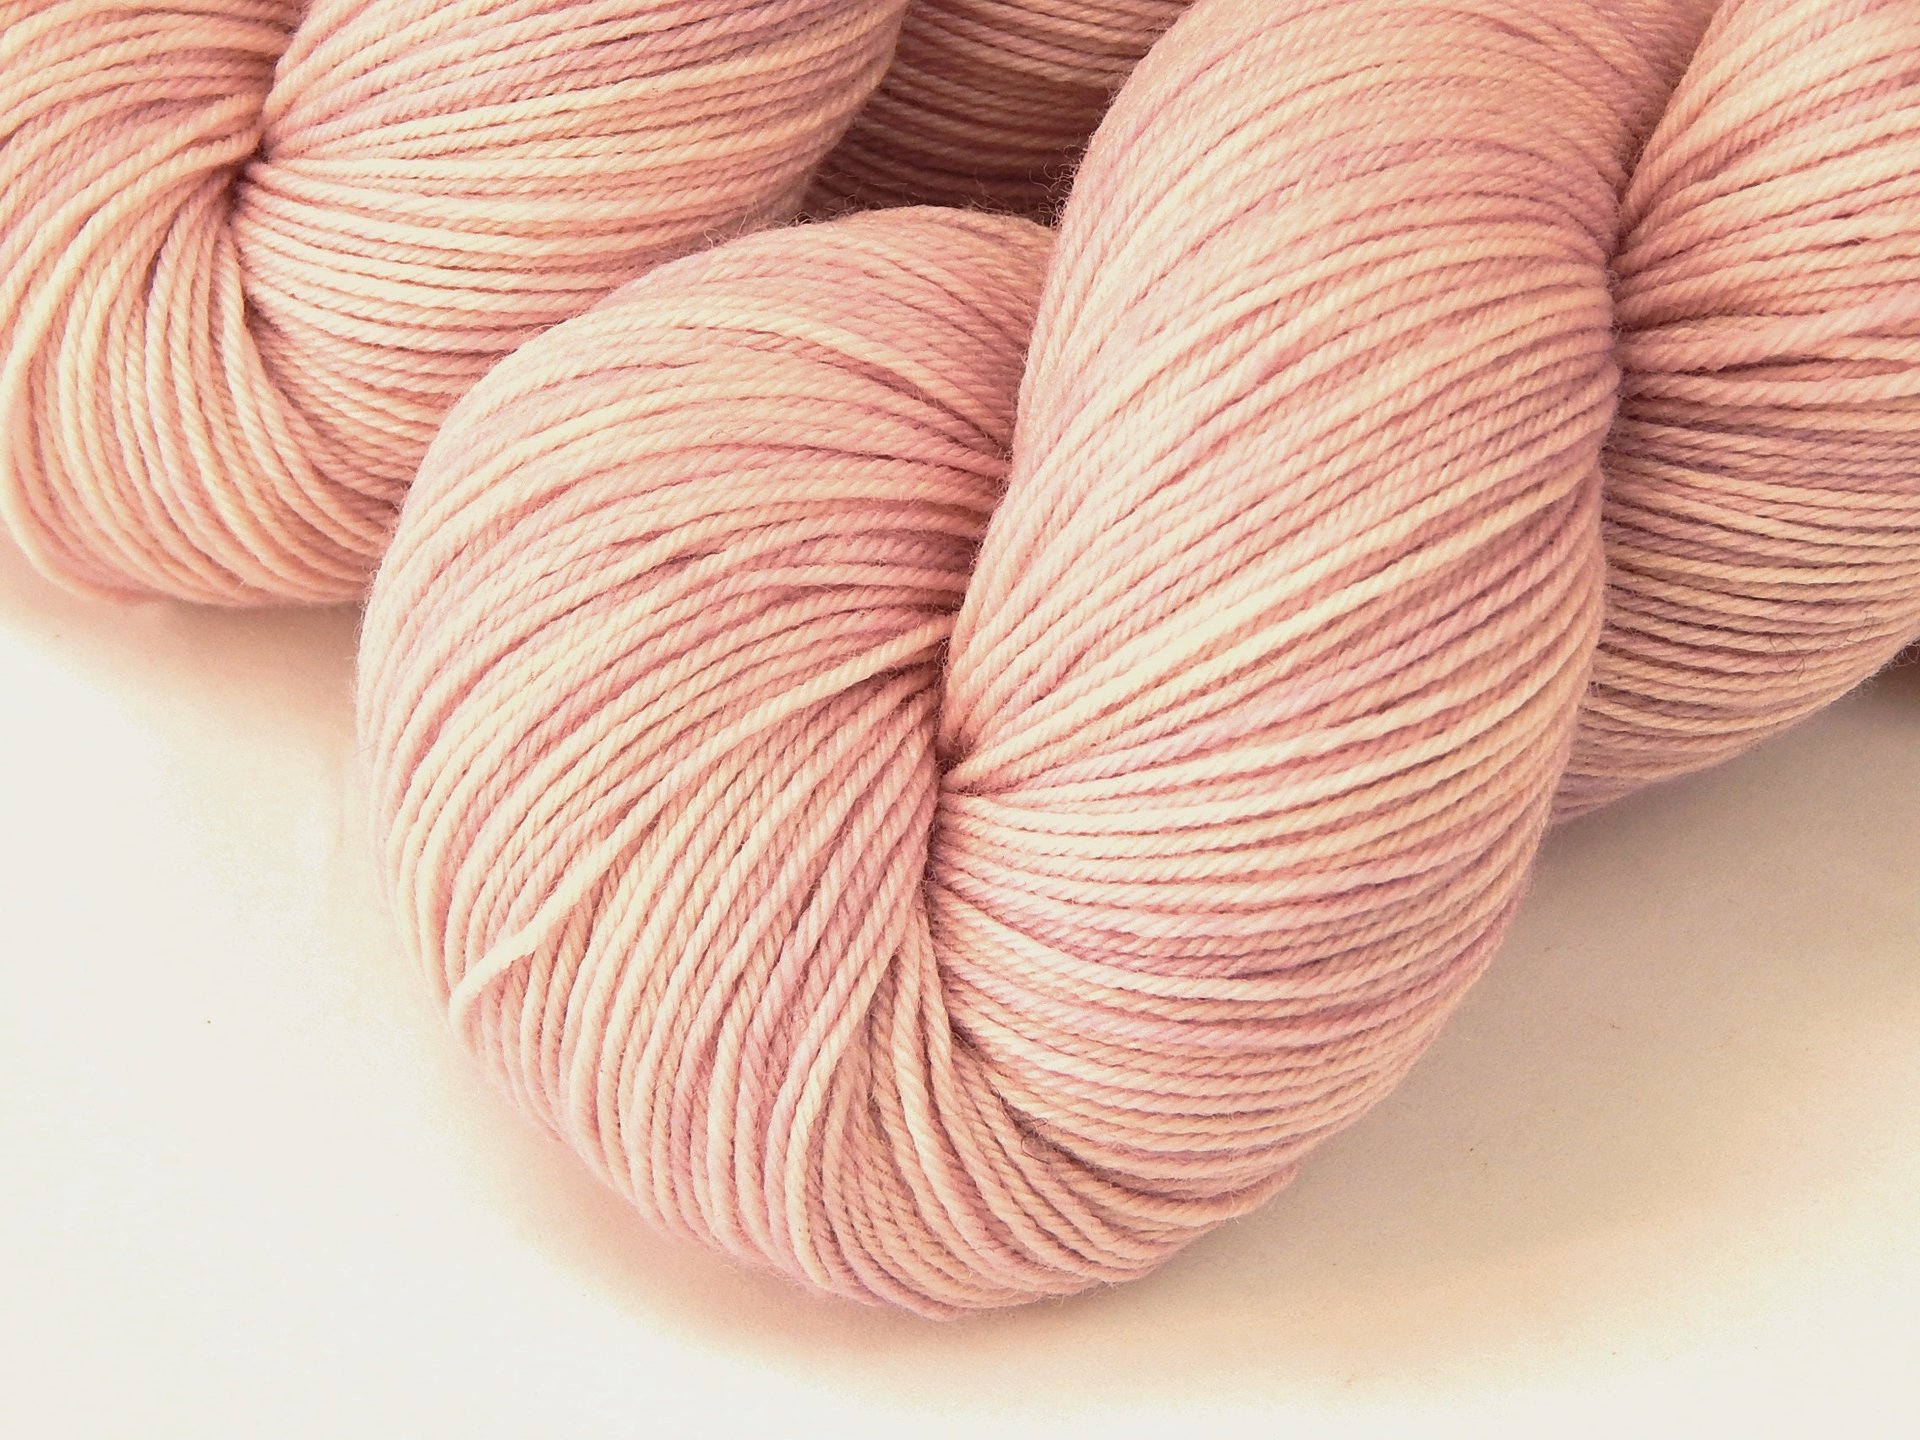 Hand Dyed Yarn, Sock Fingering Weight 4 Ply Superwash Merino Wool - Petal - Pale Pink Knitting Yarn, Tonal Semi Solid Light Rose Handdyed